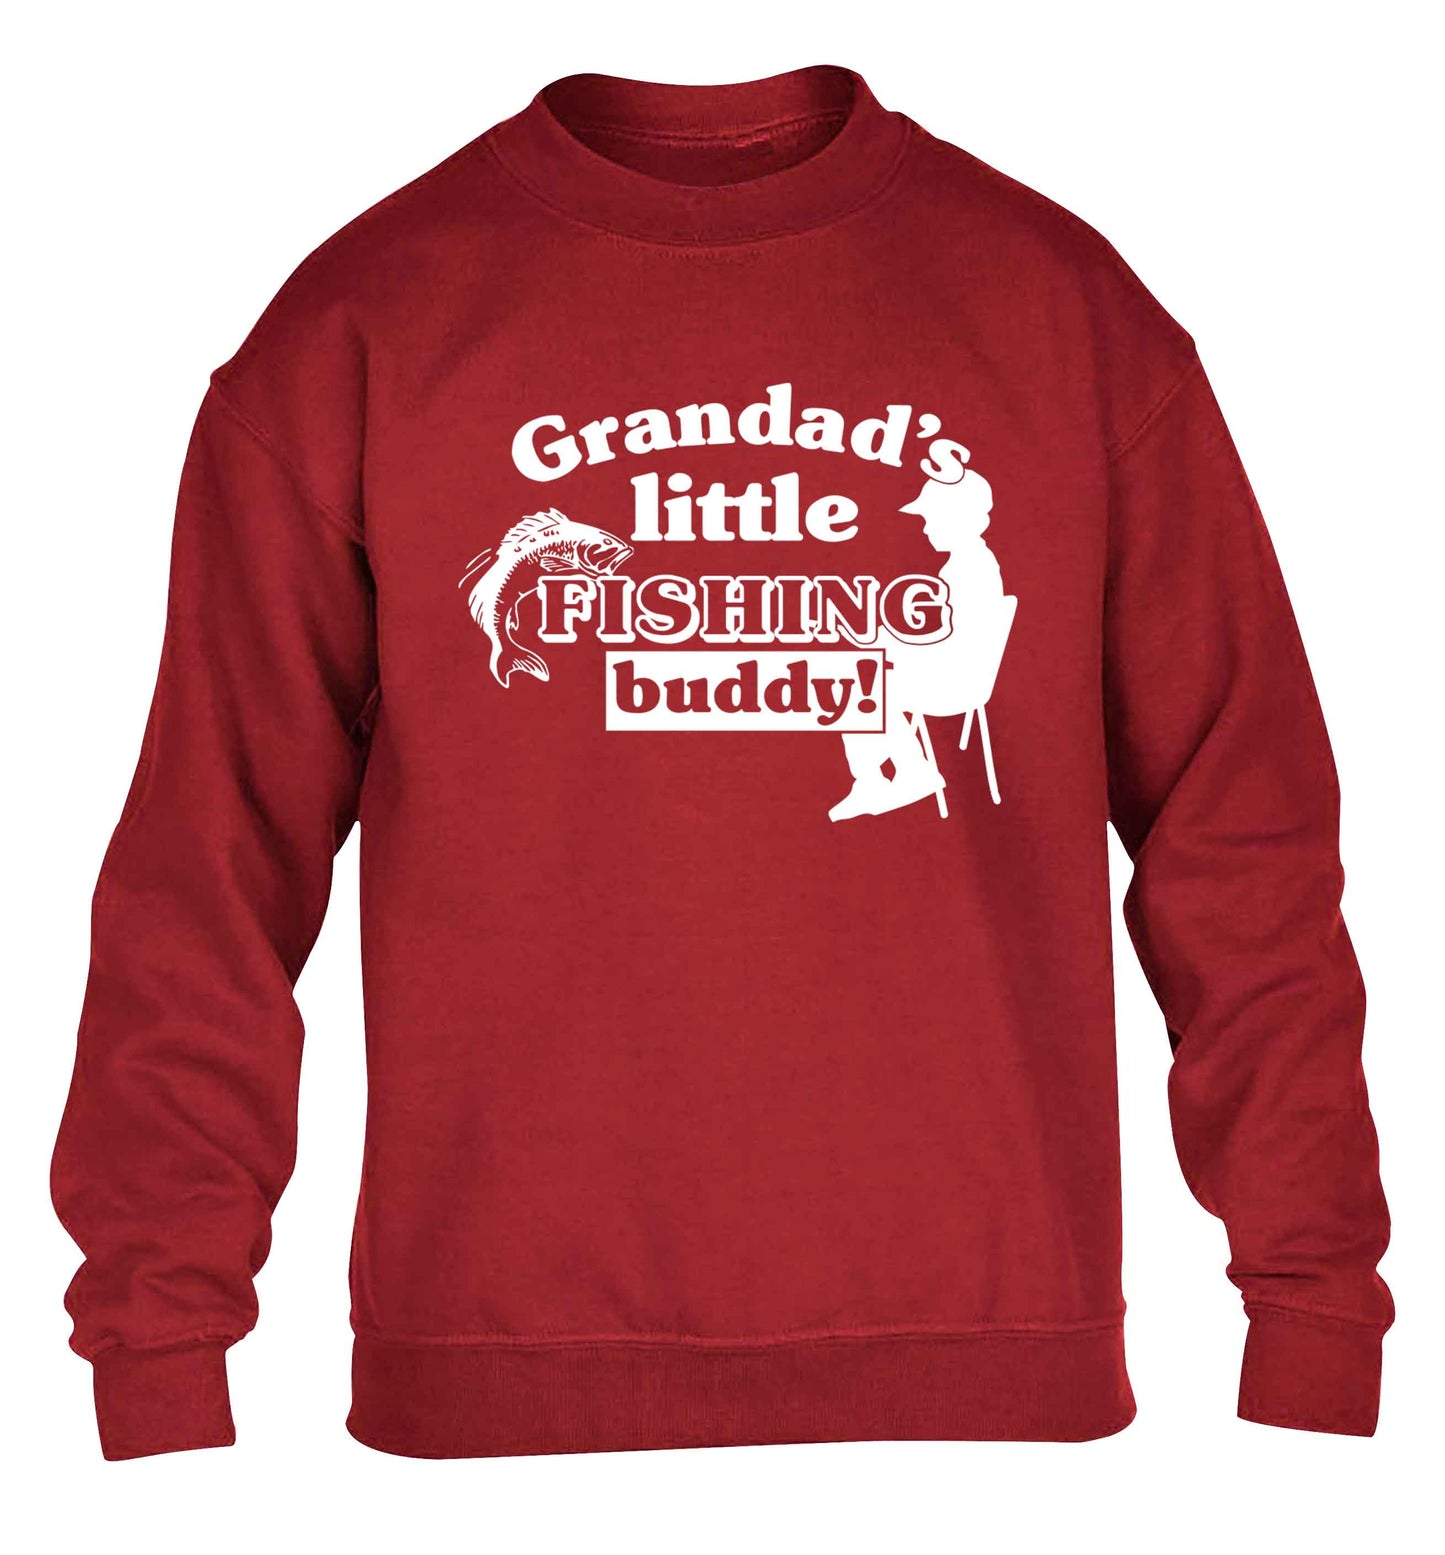 Grandad's little fishing buddy! children's grey sweater 12-13 Years